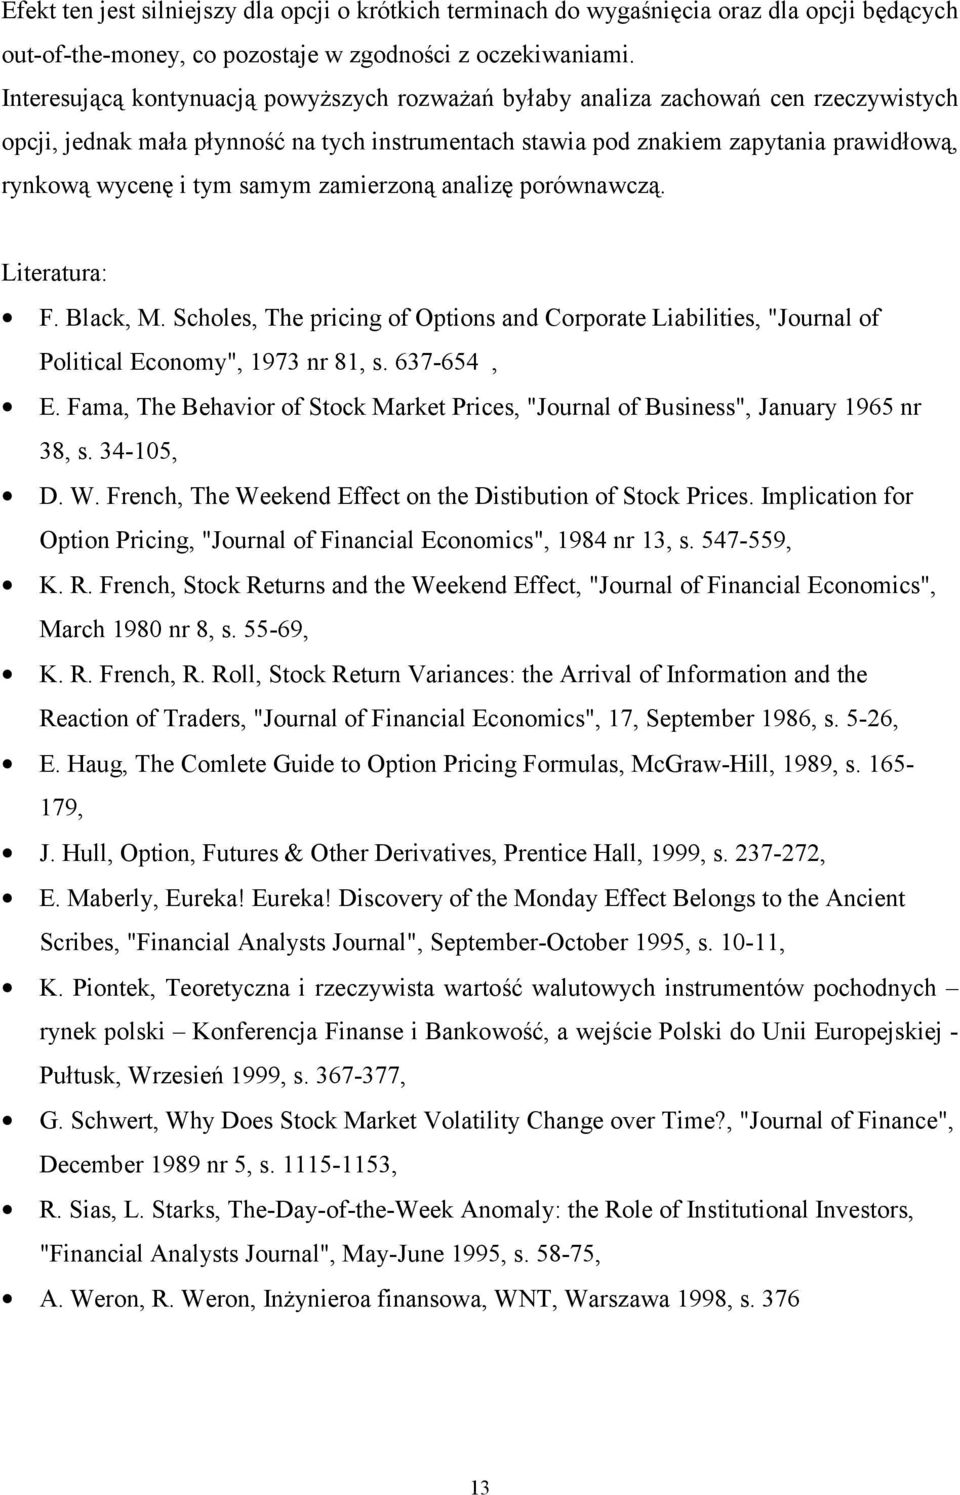 samym zamierzoną analizę porównawczą. Literatura: F. Black, M. Scholes, The pricing of Options and Corporate Liabilities, "Journal of Political Economy", 973 nr 8, s. 637-654, E.